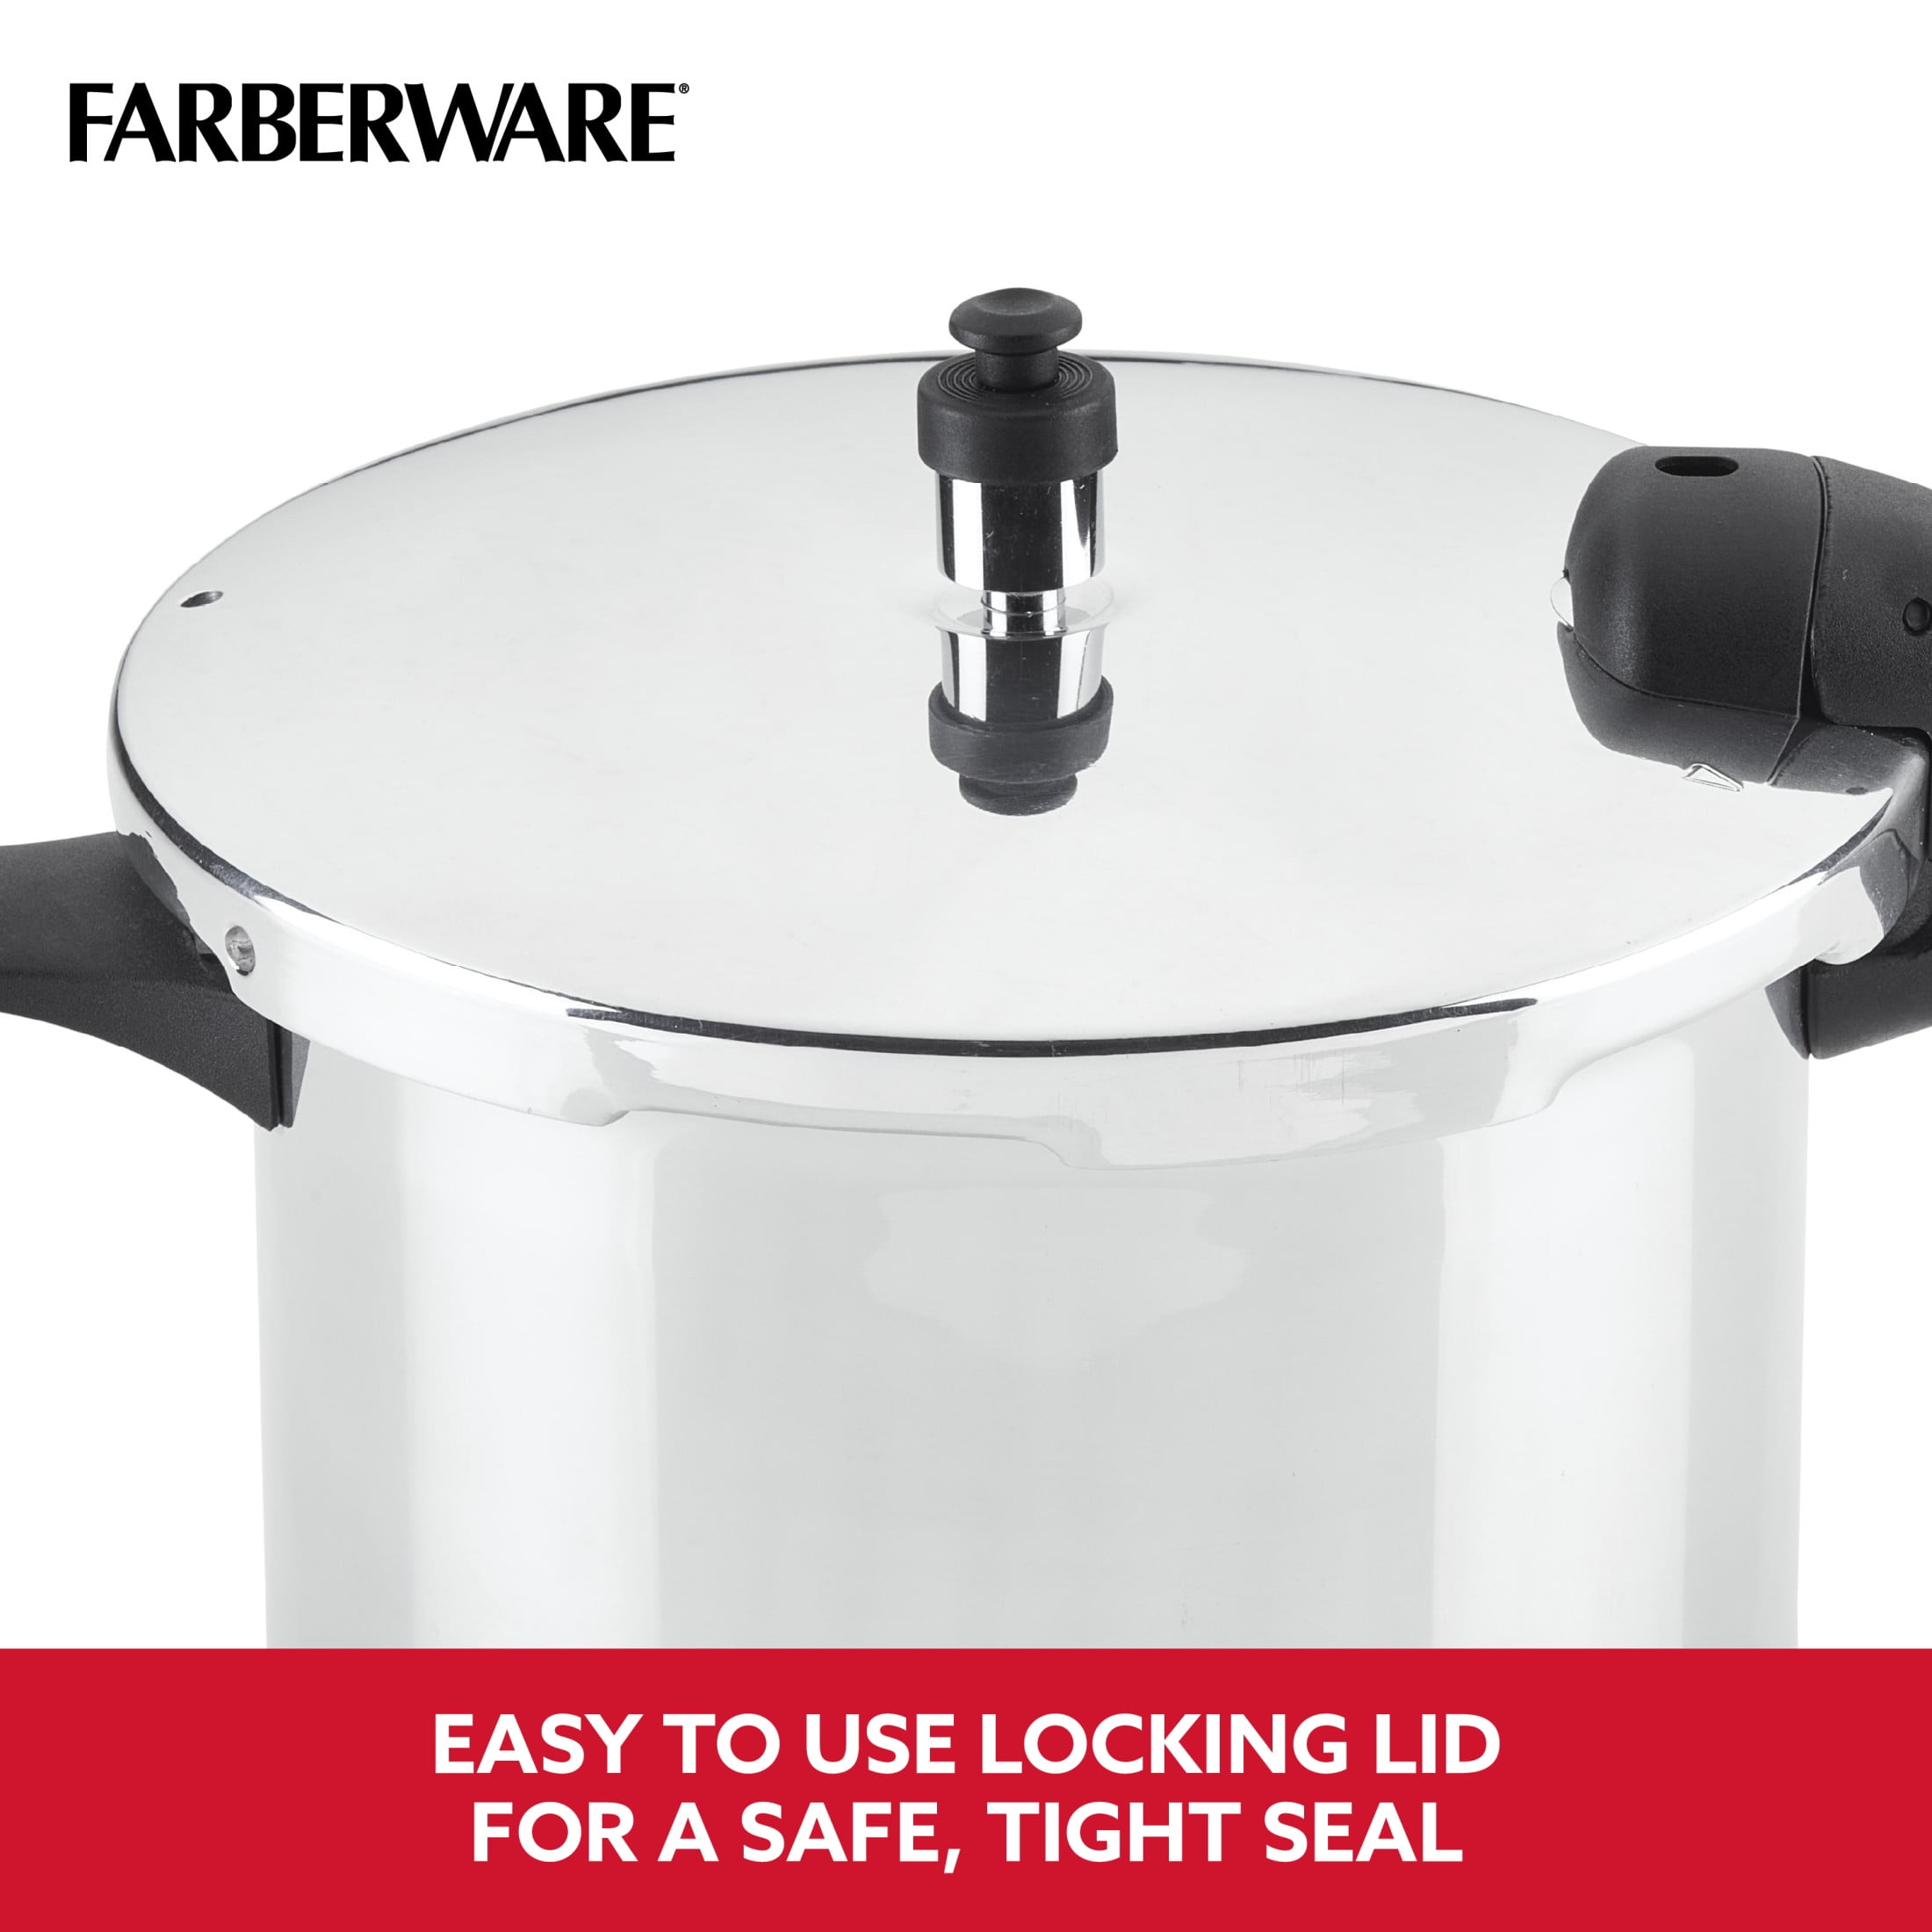 Farberware 8-Quart 7-in-1 Programmable Pressure Cooker 